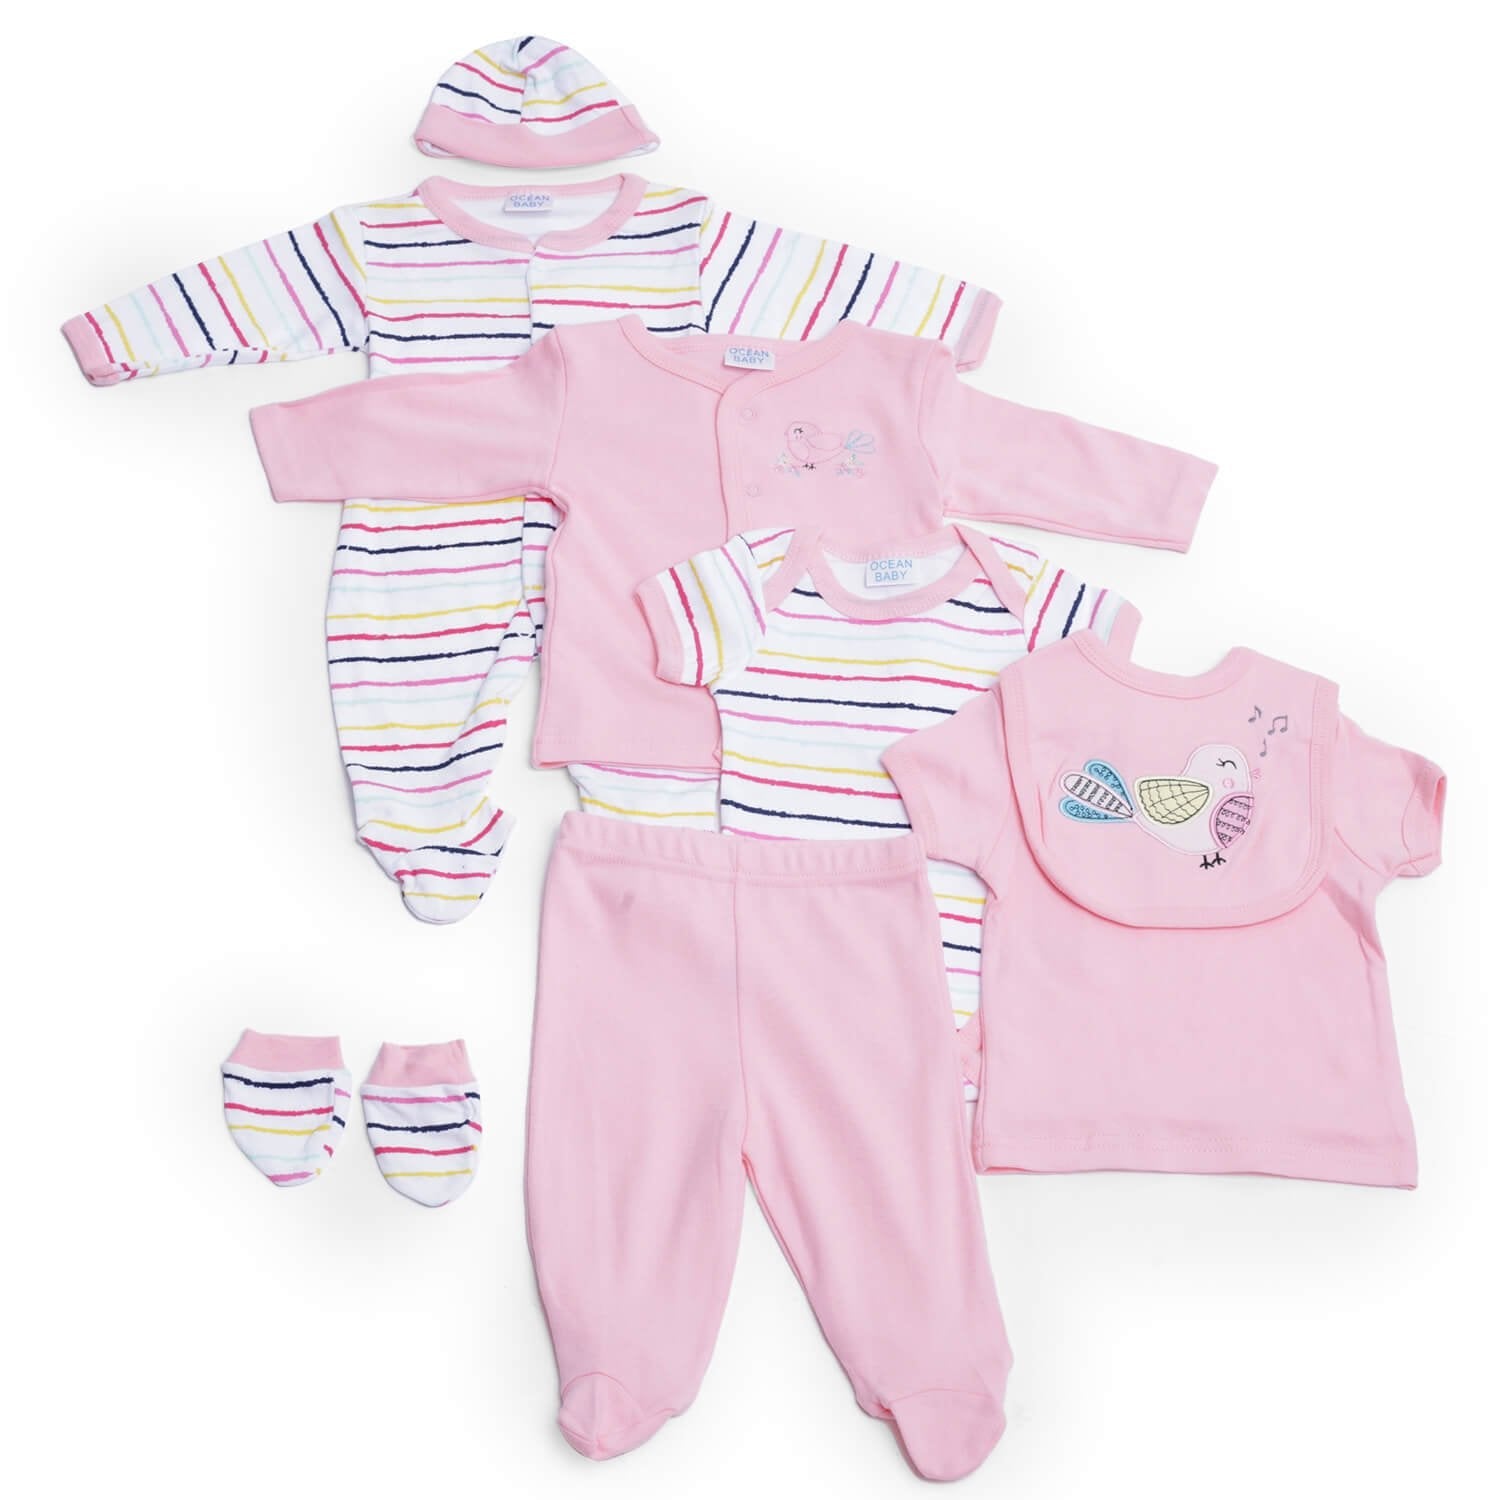 8 pcs Pink Bird Baby Girl/Boy Clothes Set - Little Surprise Box8 pcs Pink Bird Baby Girl/Boy Clothes Set